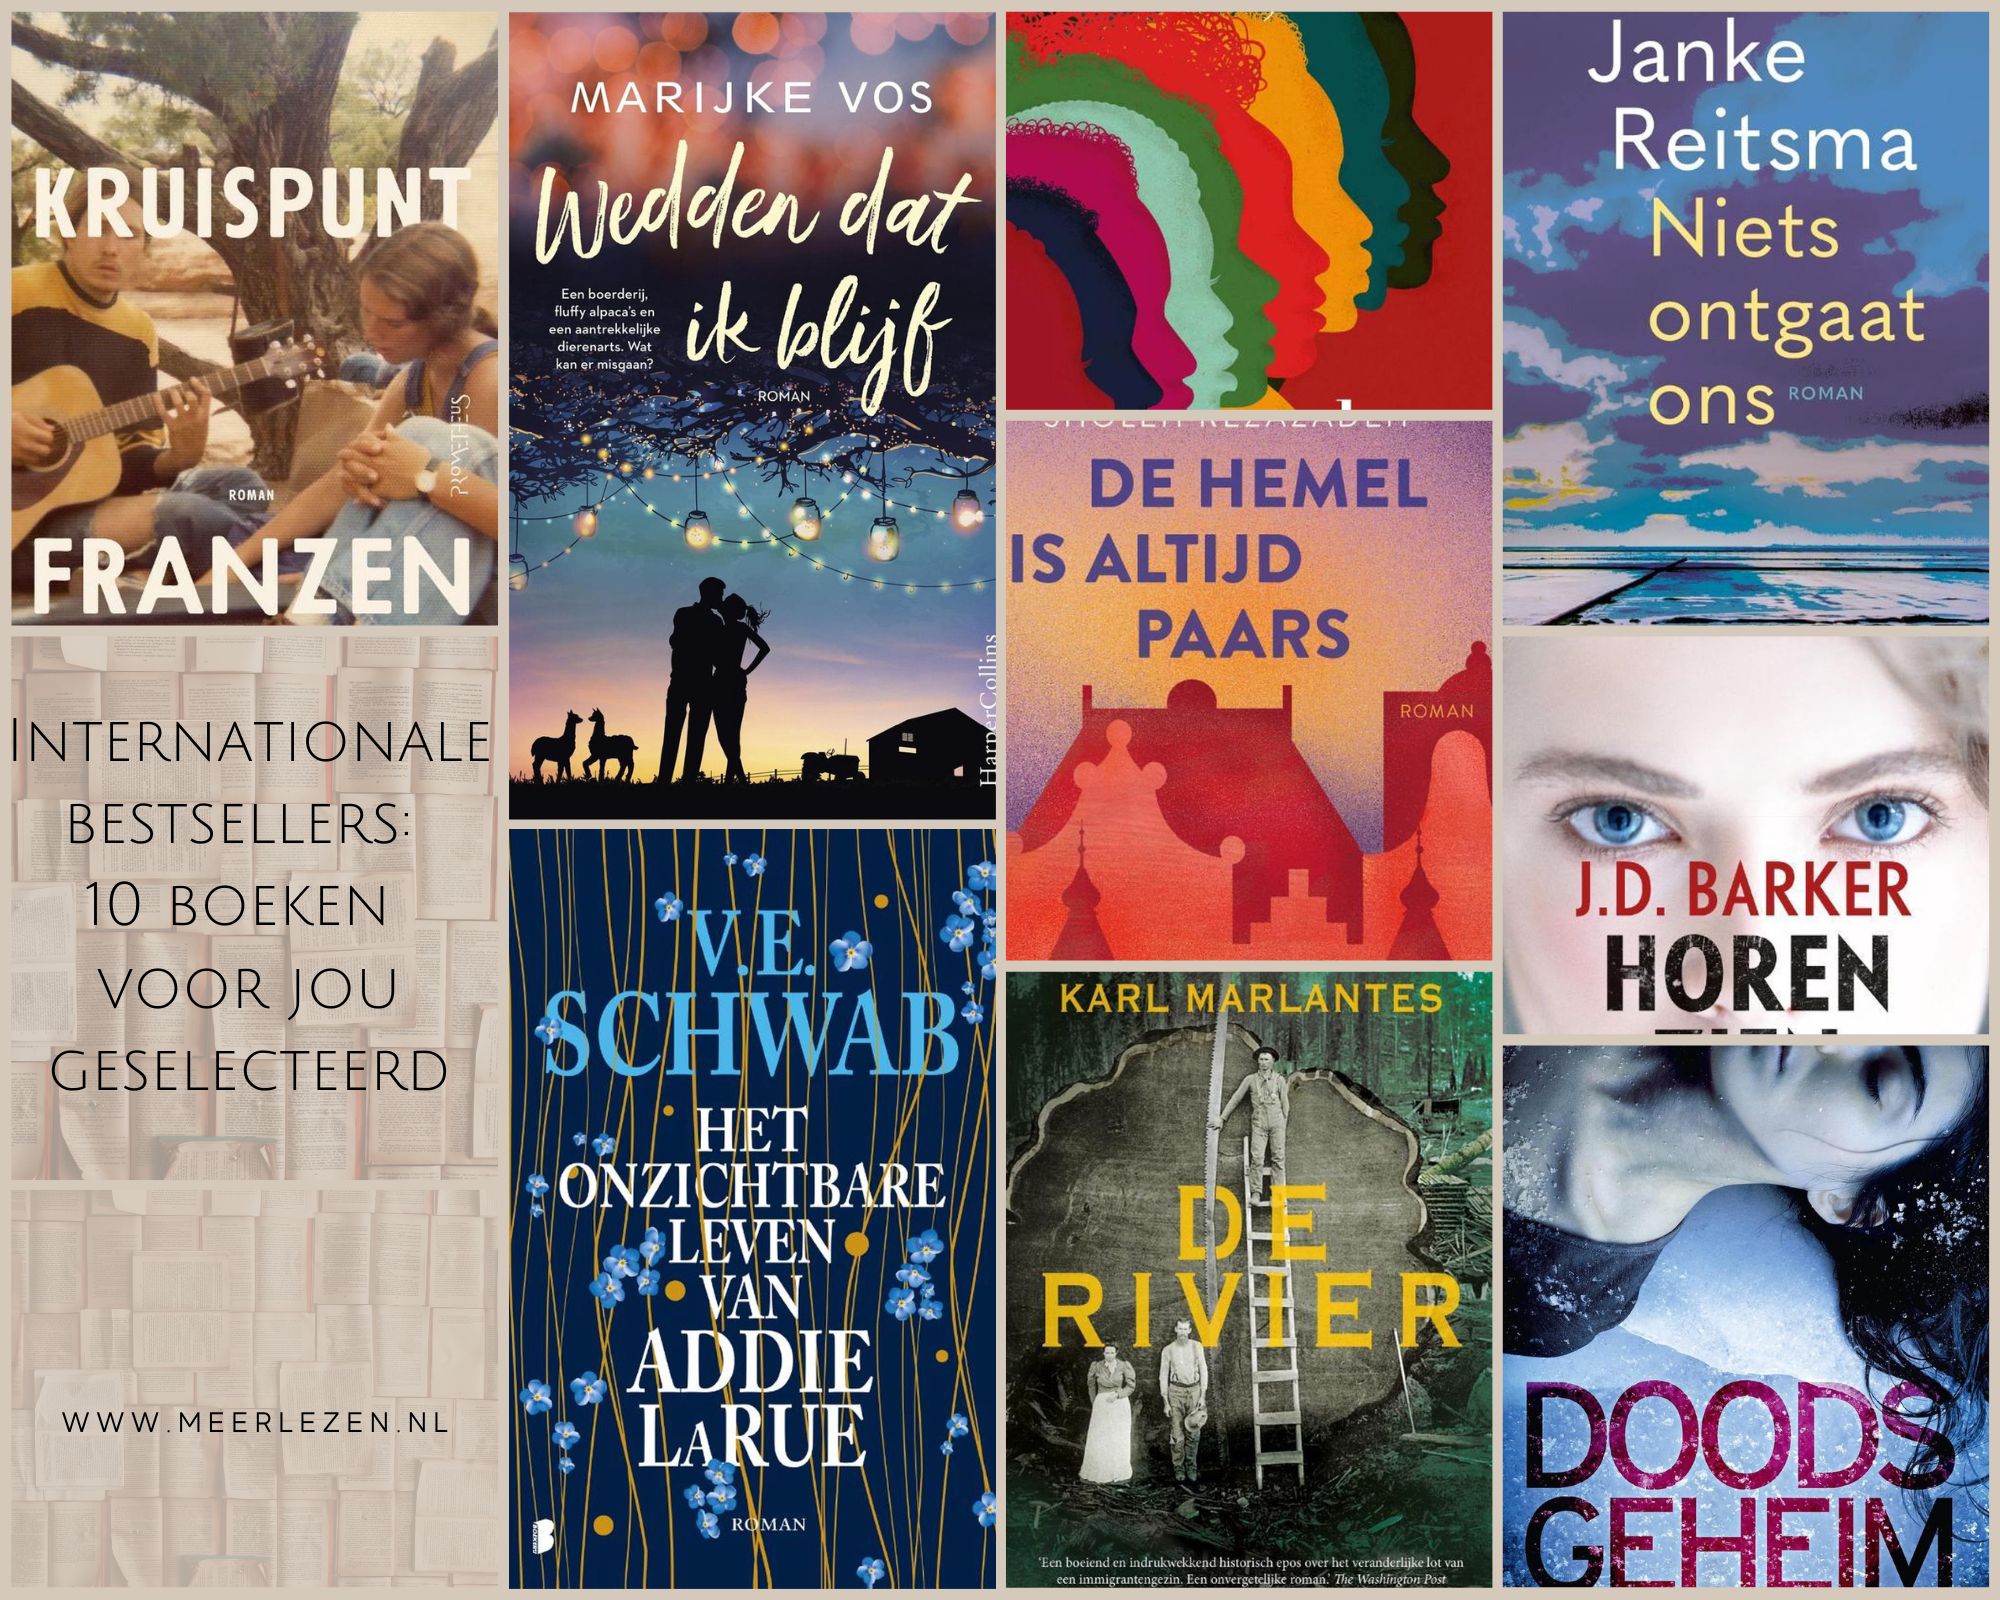 Internationale bestsellers: 10 boeken voor jou geselecteerd